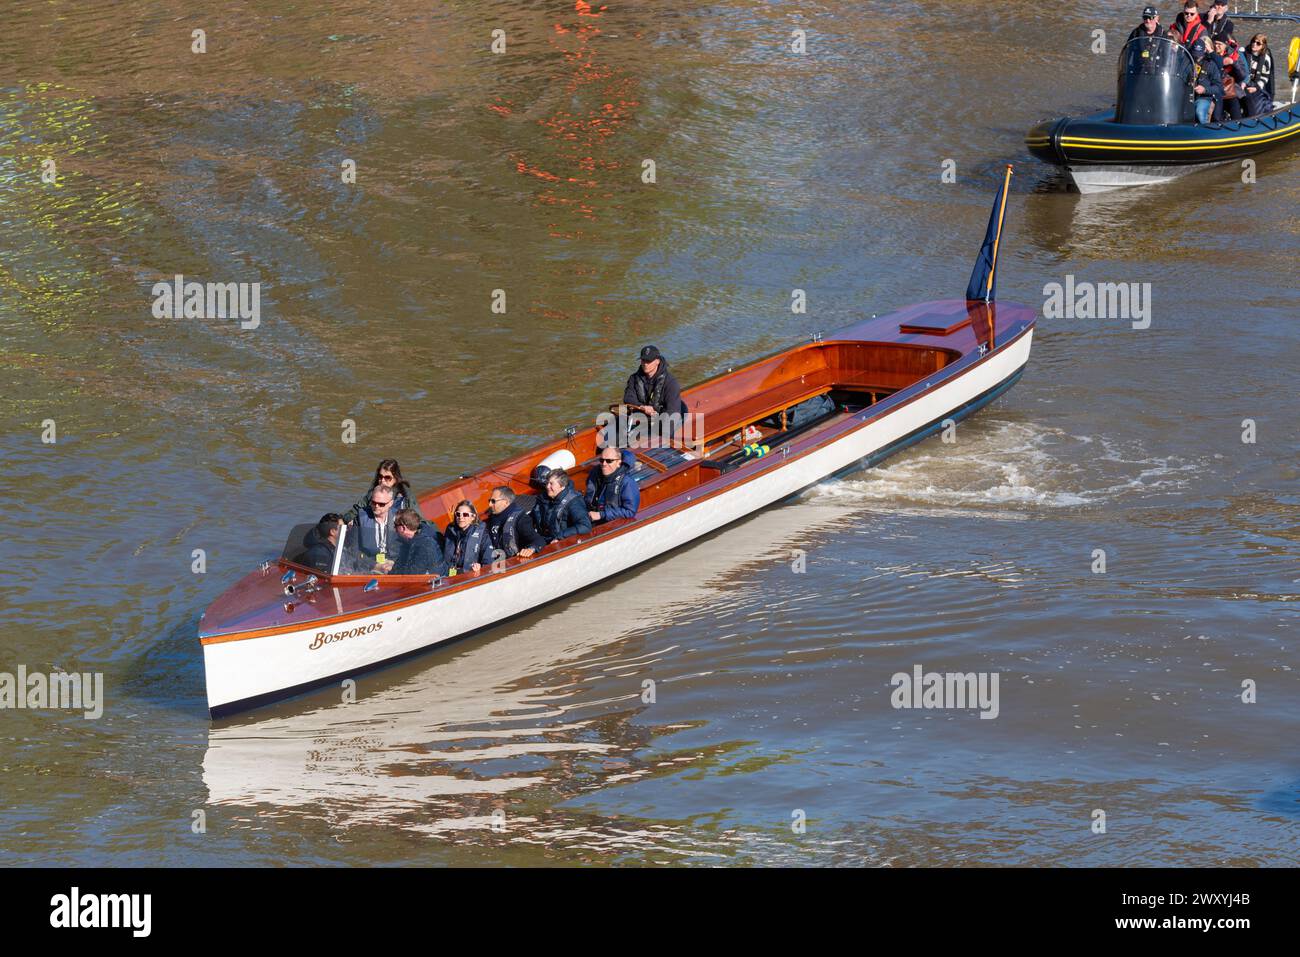 Bosporos 50' launch at the University Boat Race on the River Thames near the finish at Chiswick Bridge, London, UK. Chase boat Stock Photo